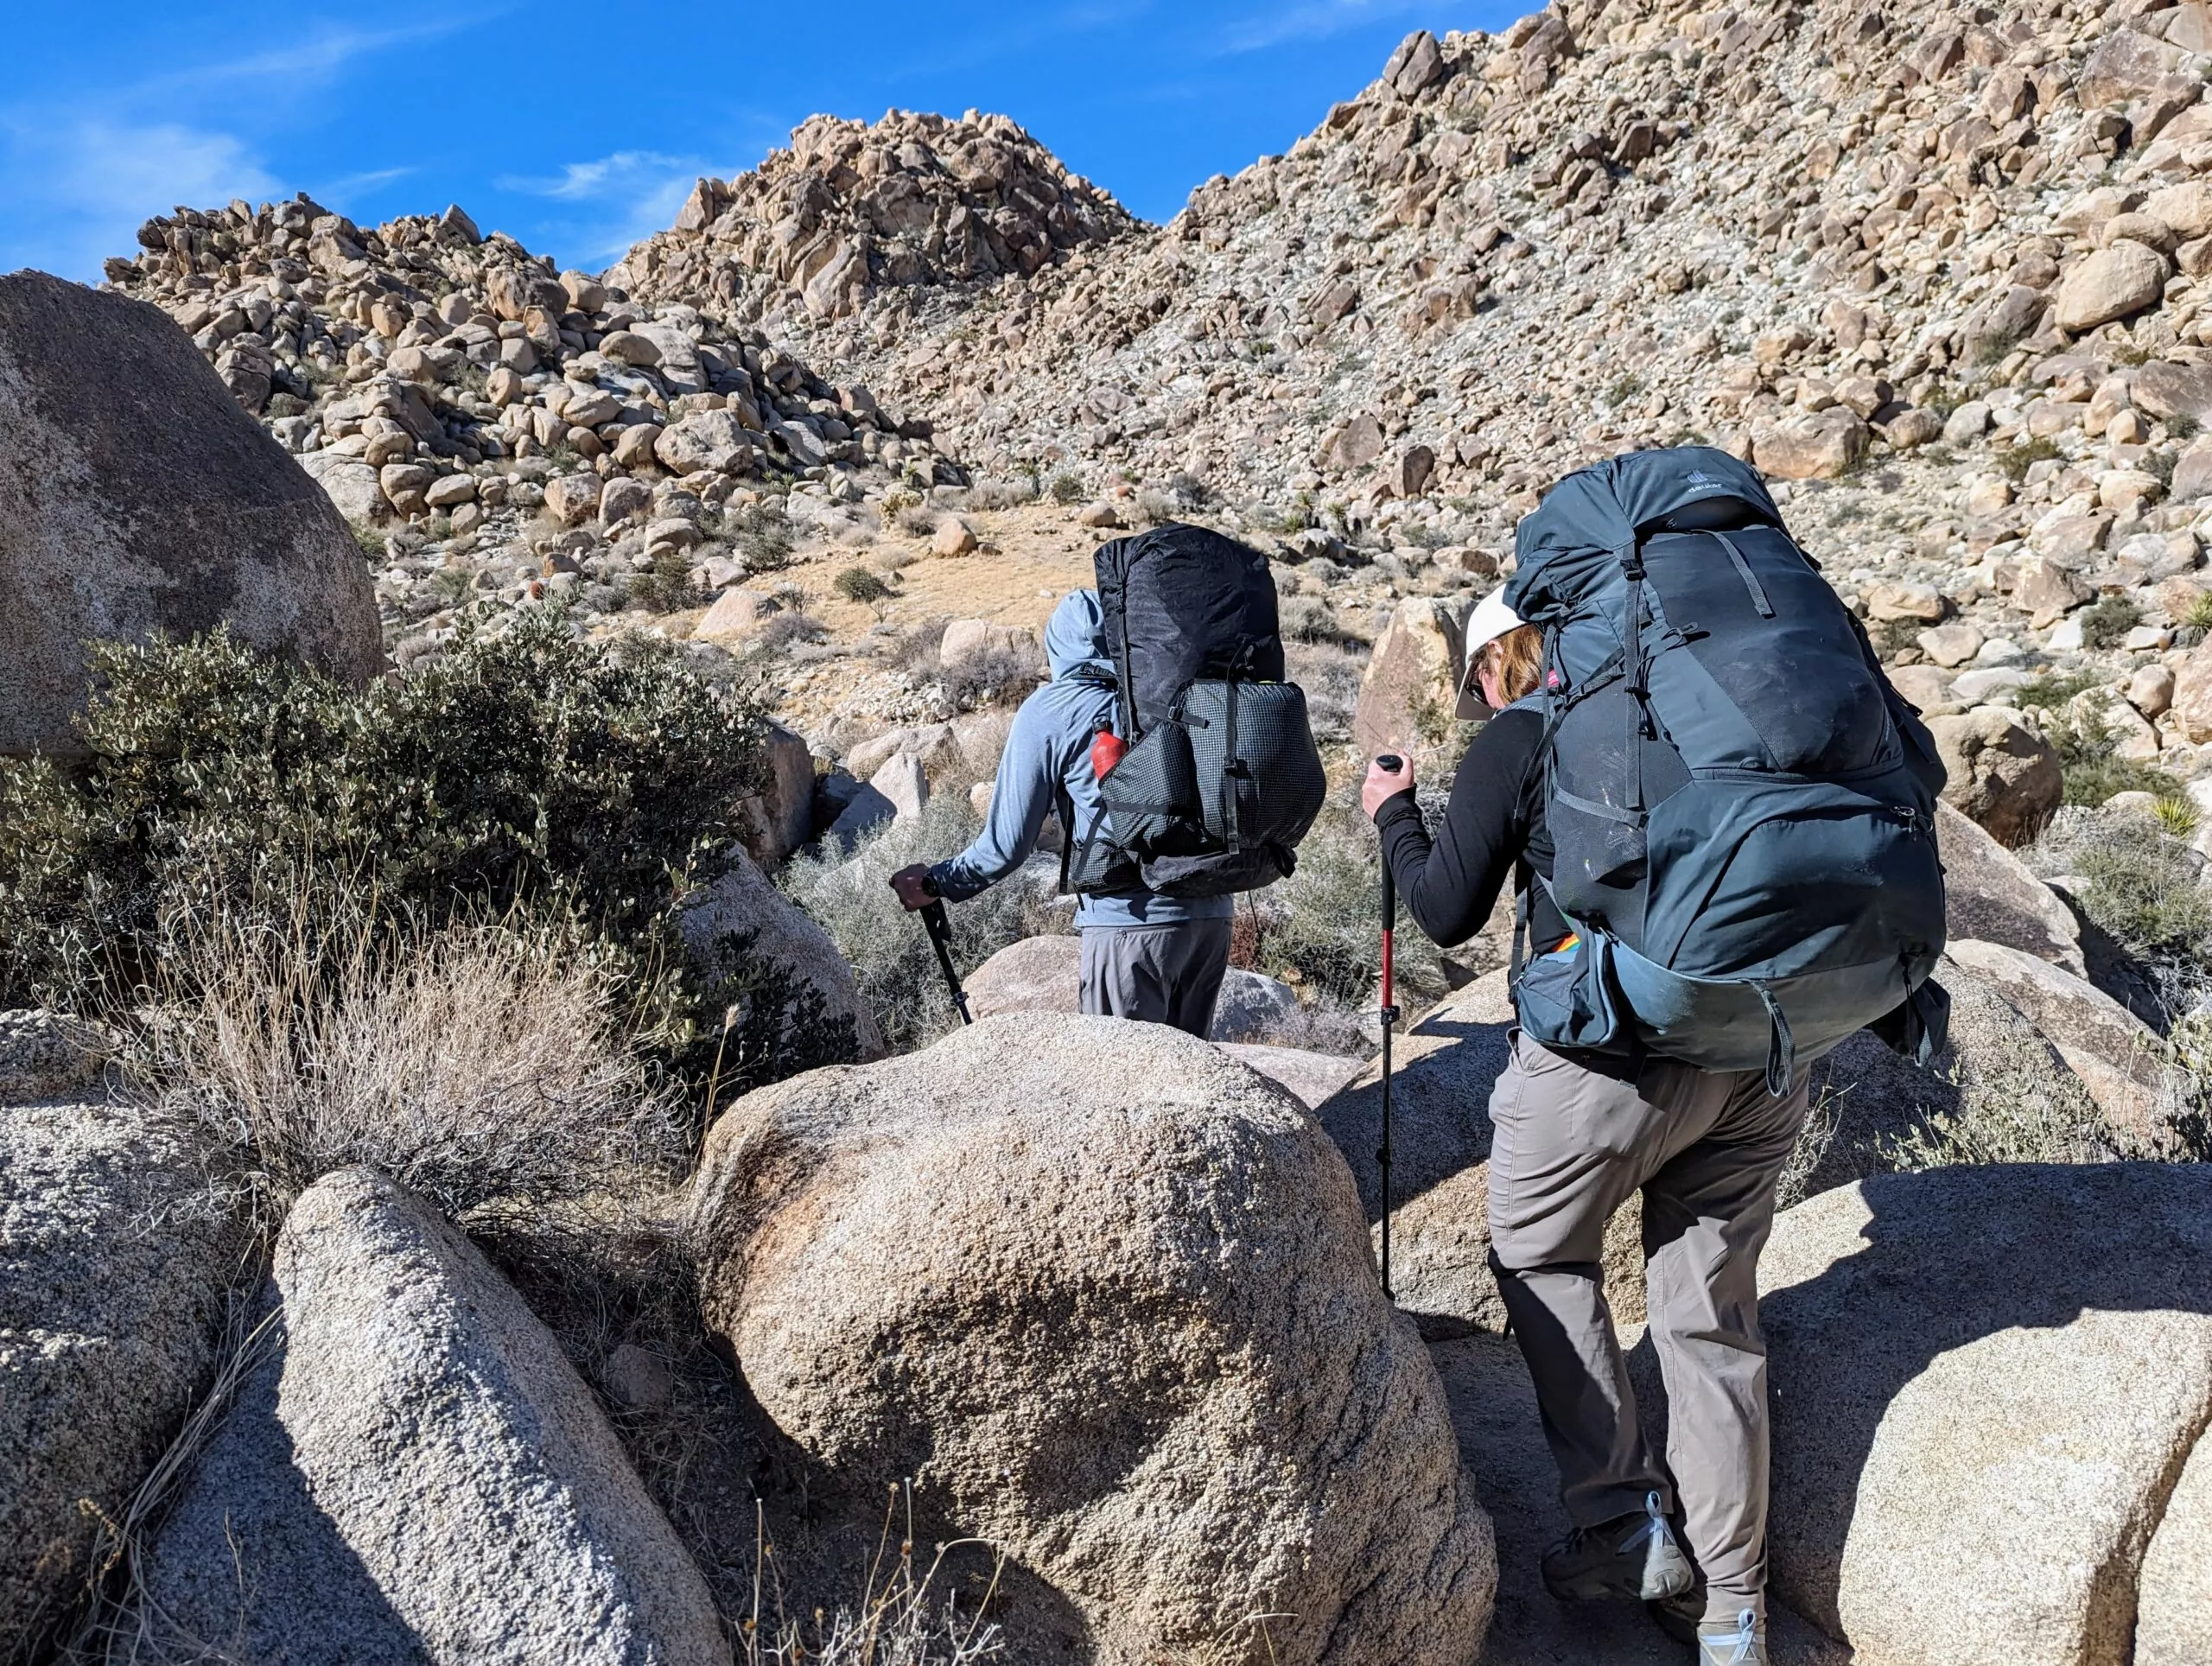 Backpacking in Joshua Tree's wonderland of rocks